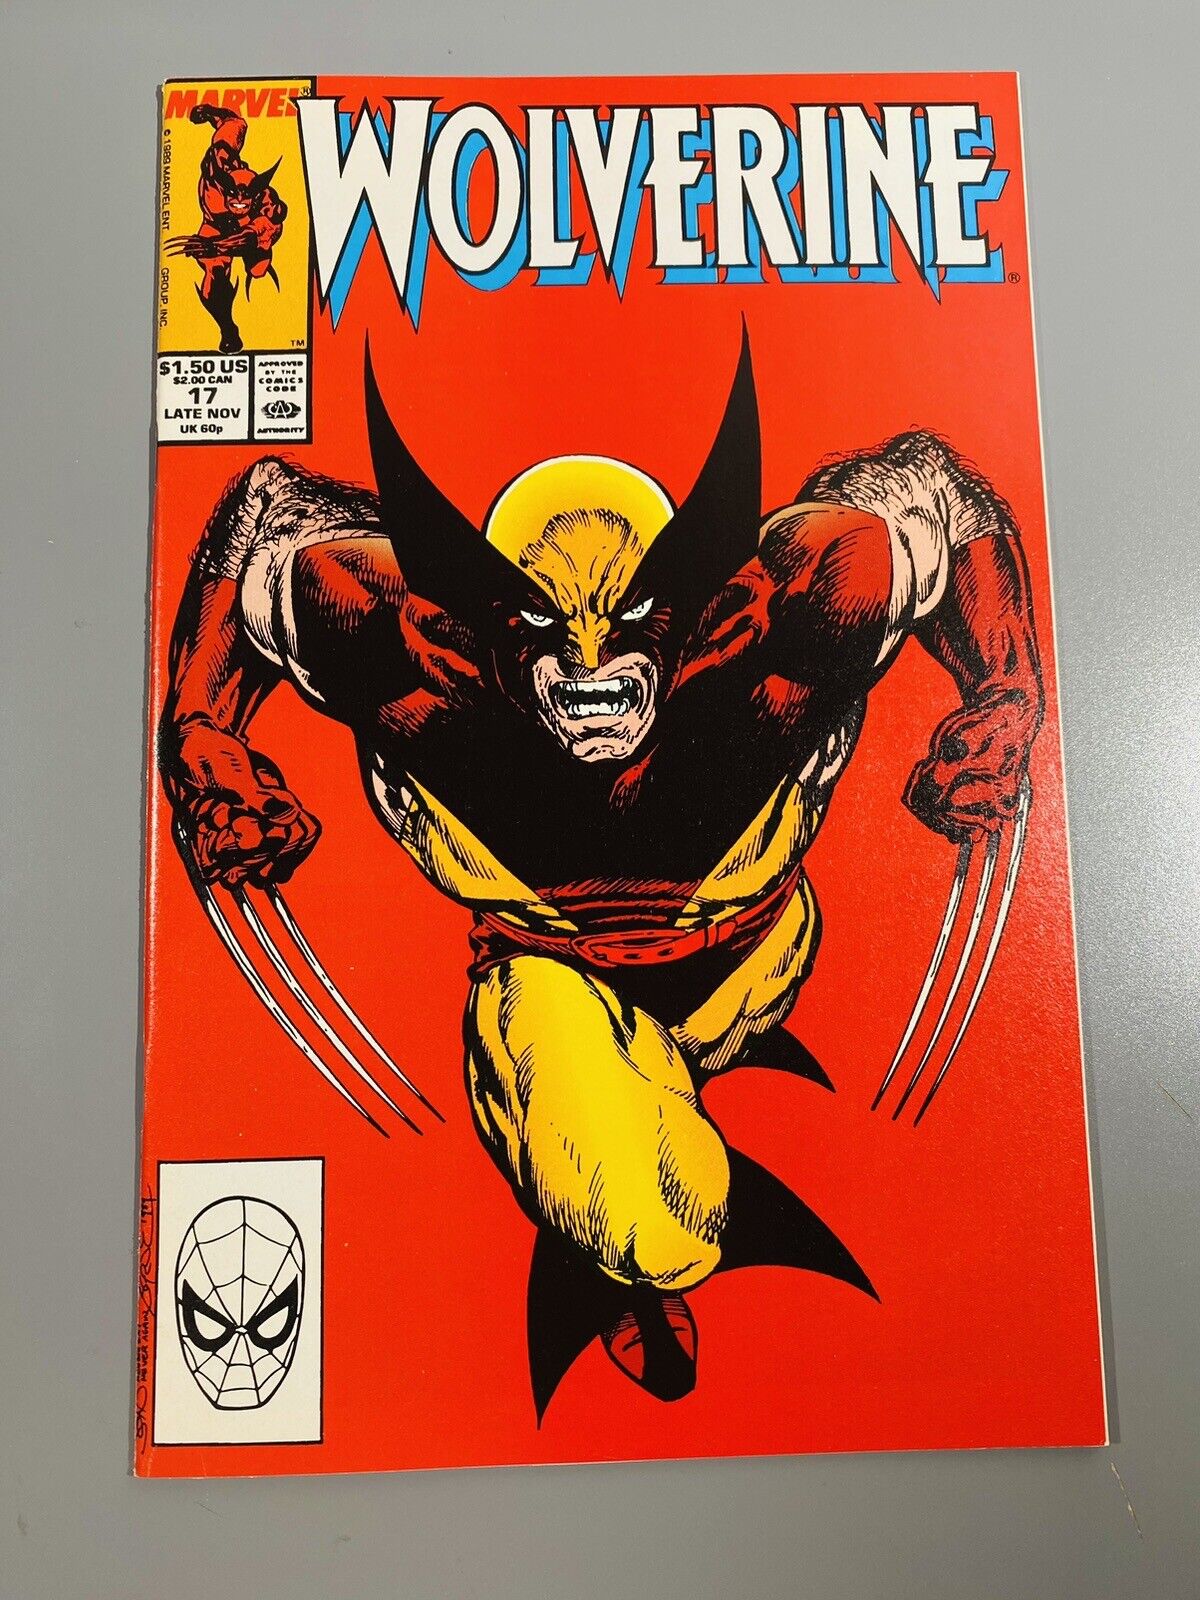 Wolverine #17 NM Classic John Byrne Cover Marvel Comics 1989 1st Print